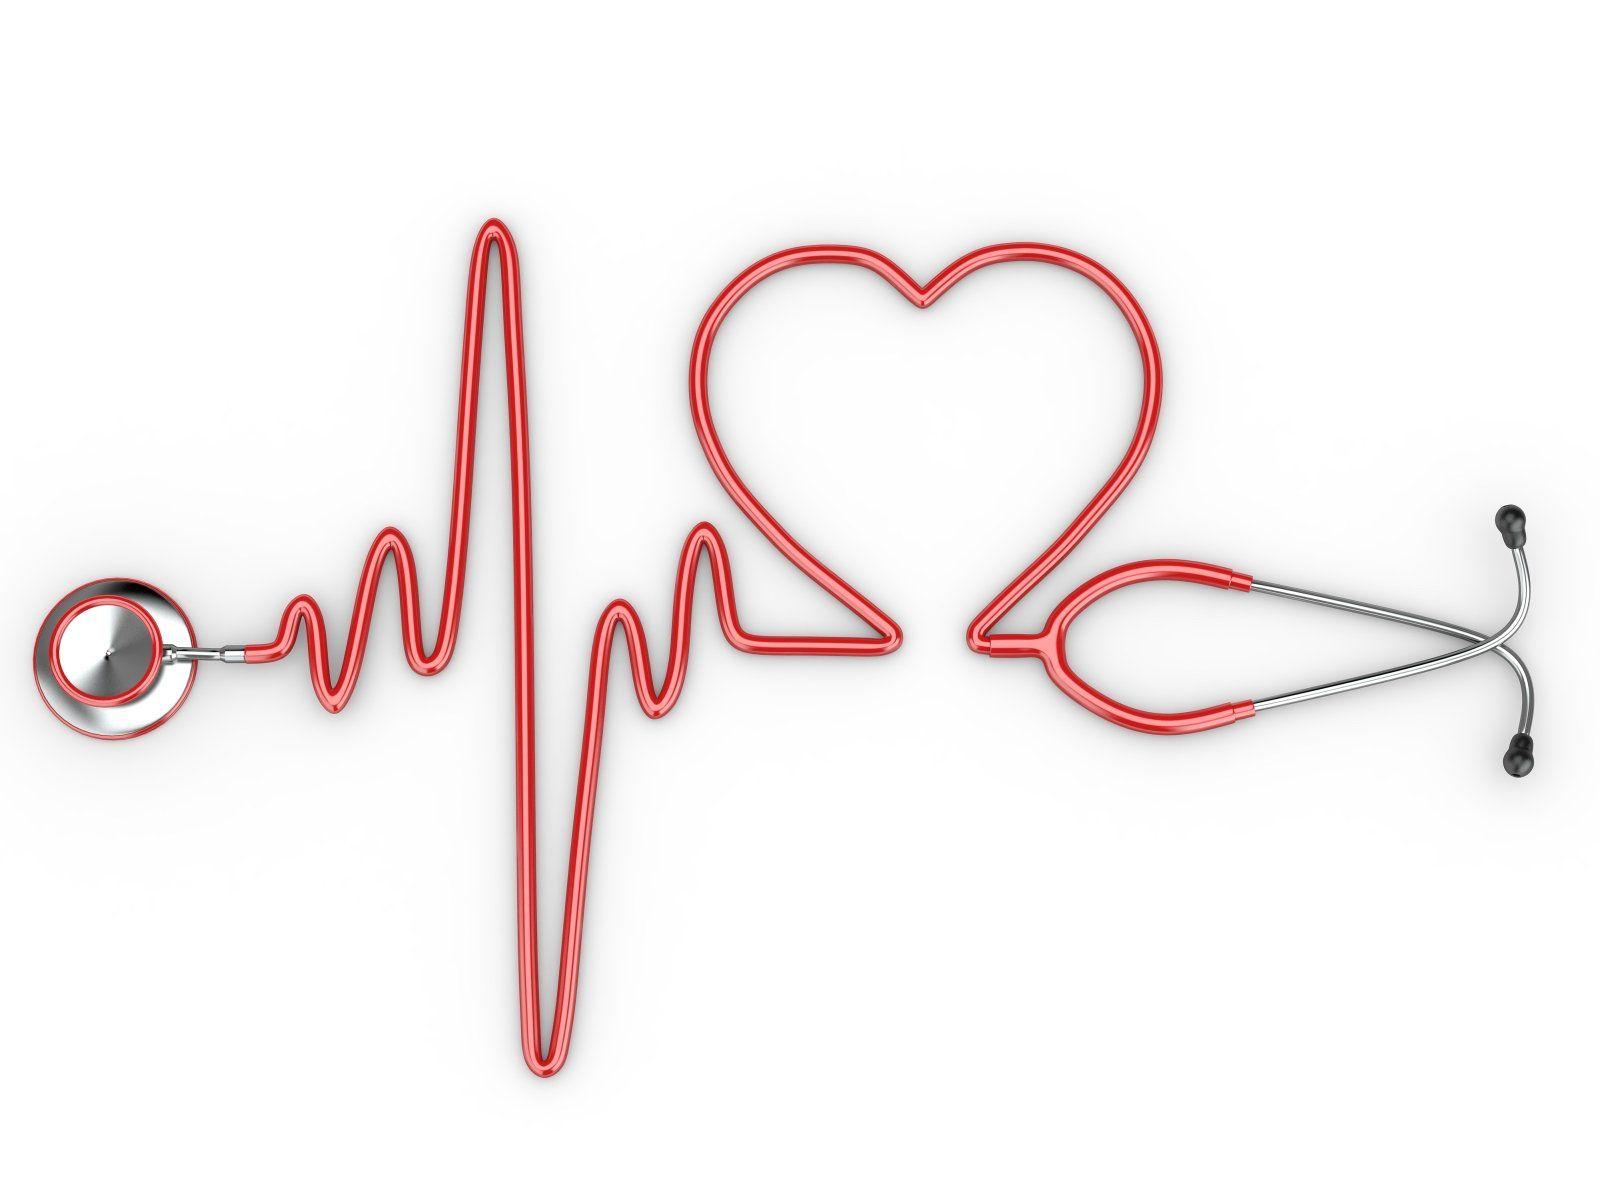 1,000+ Free Nurse & Doctor Images - Pixabay